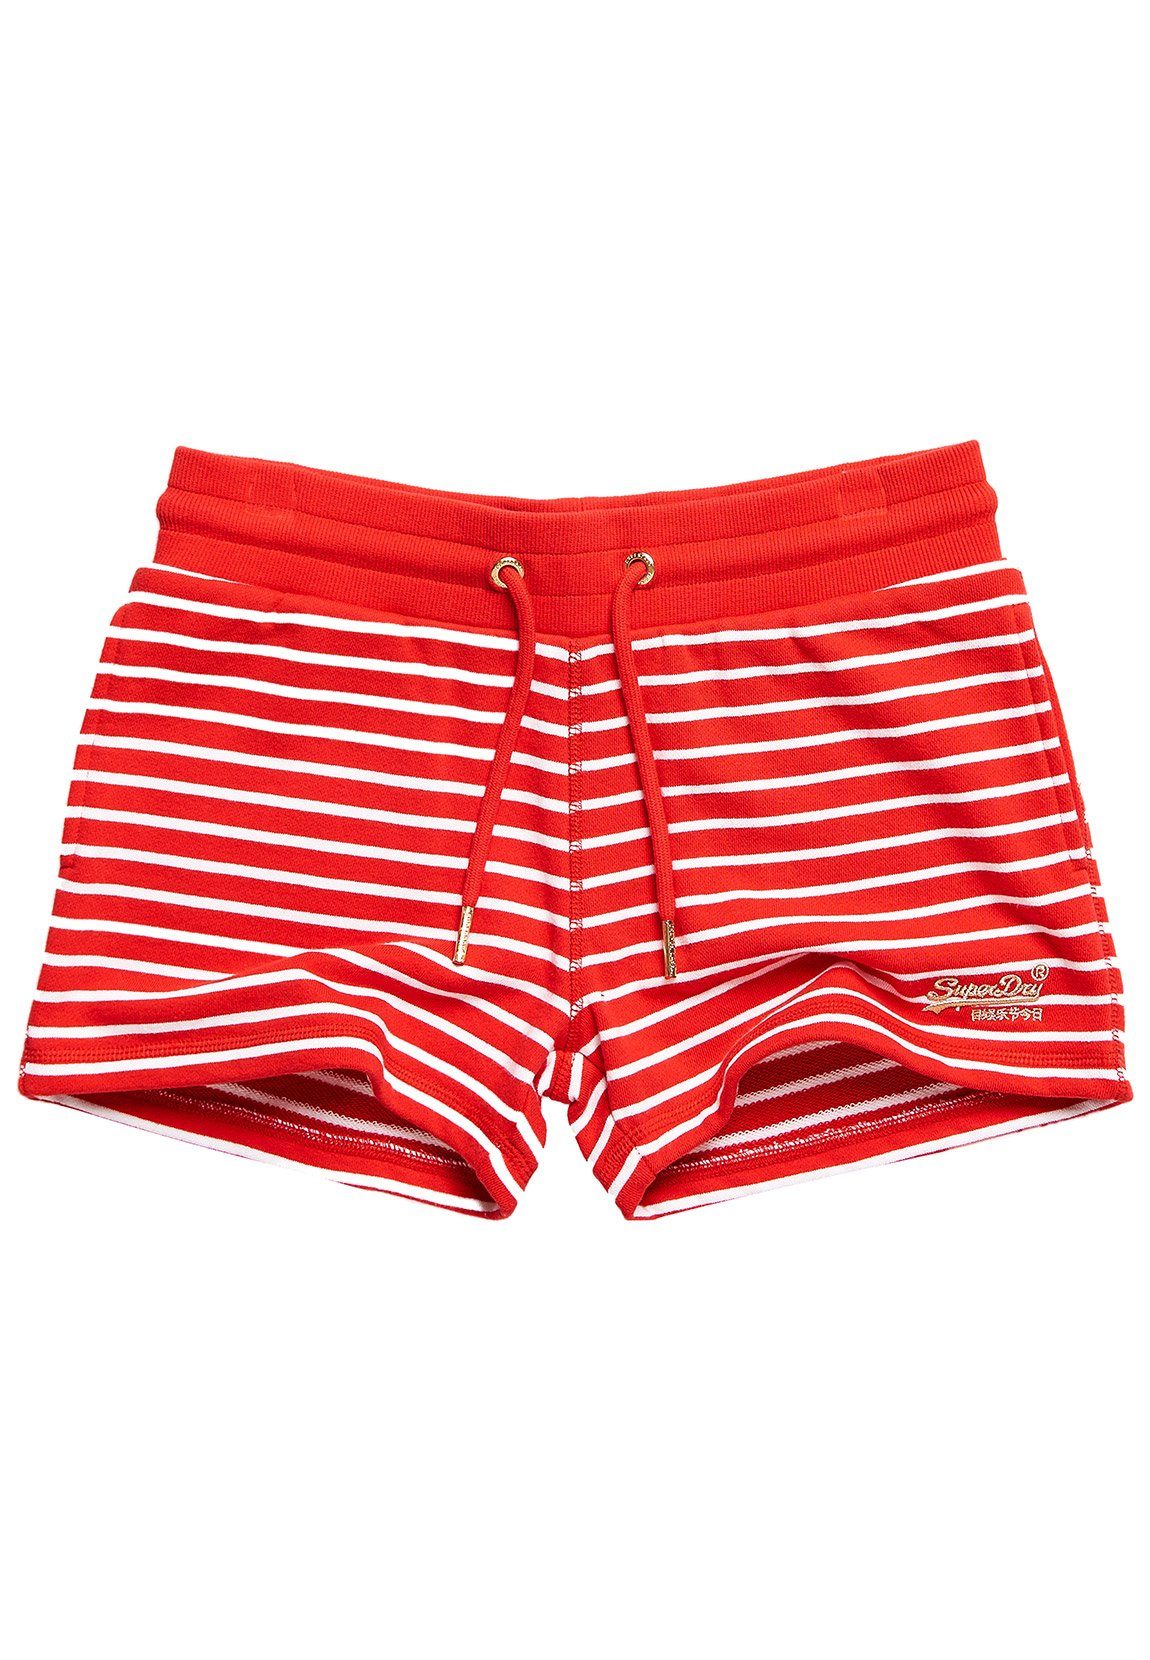 Superdry Shorts Superdry Shorts Damen ORANGE LABEL CLASSIC SHORT Red Stripe